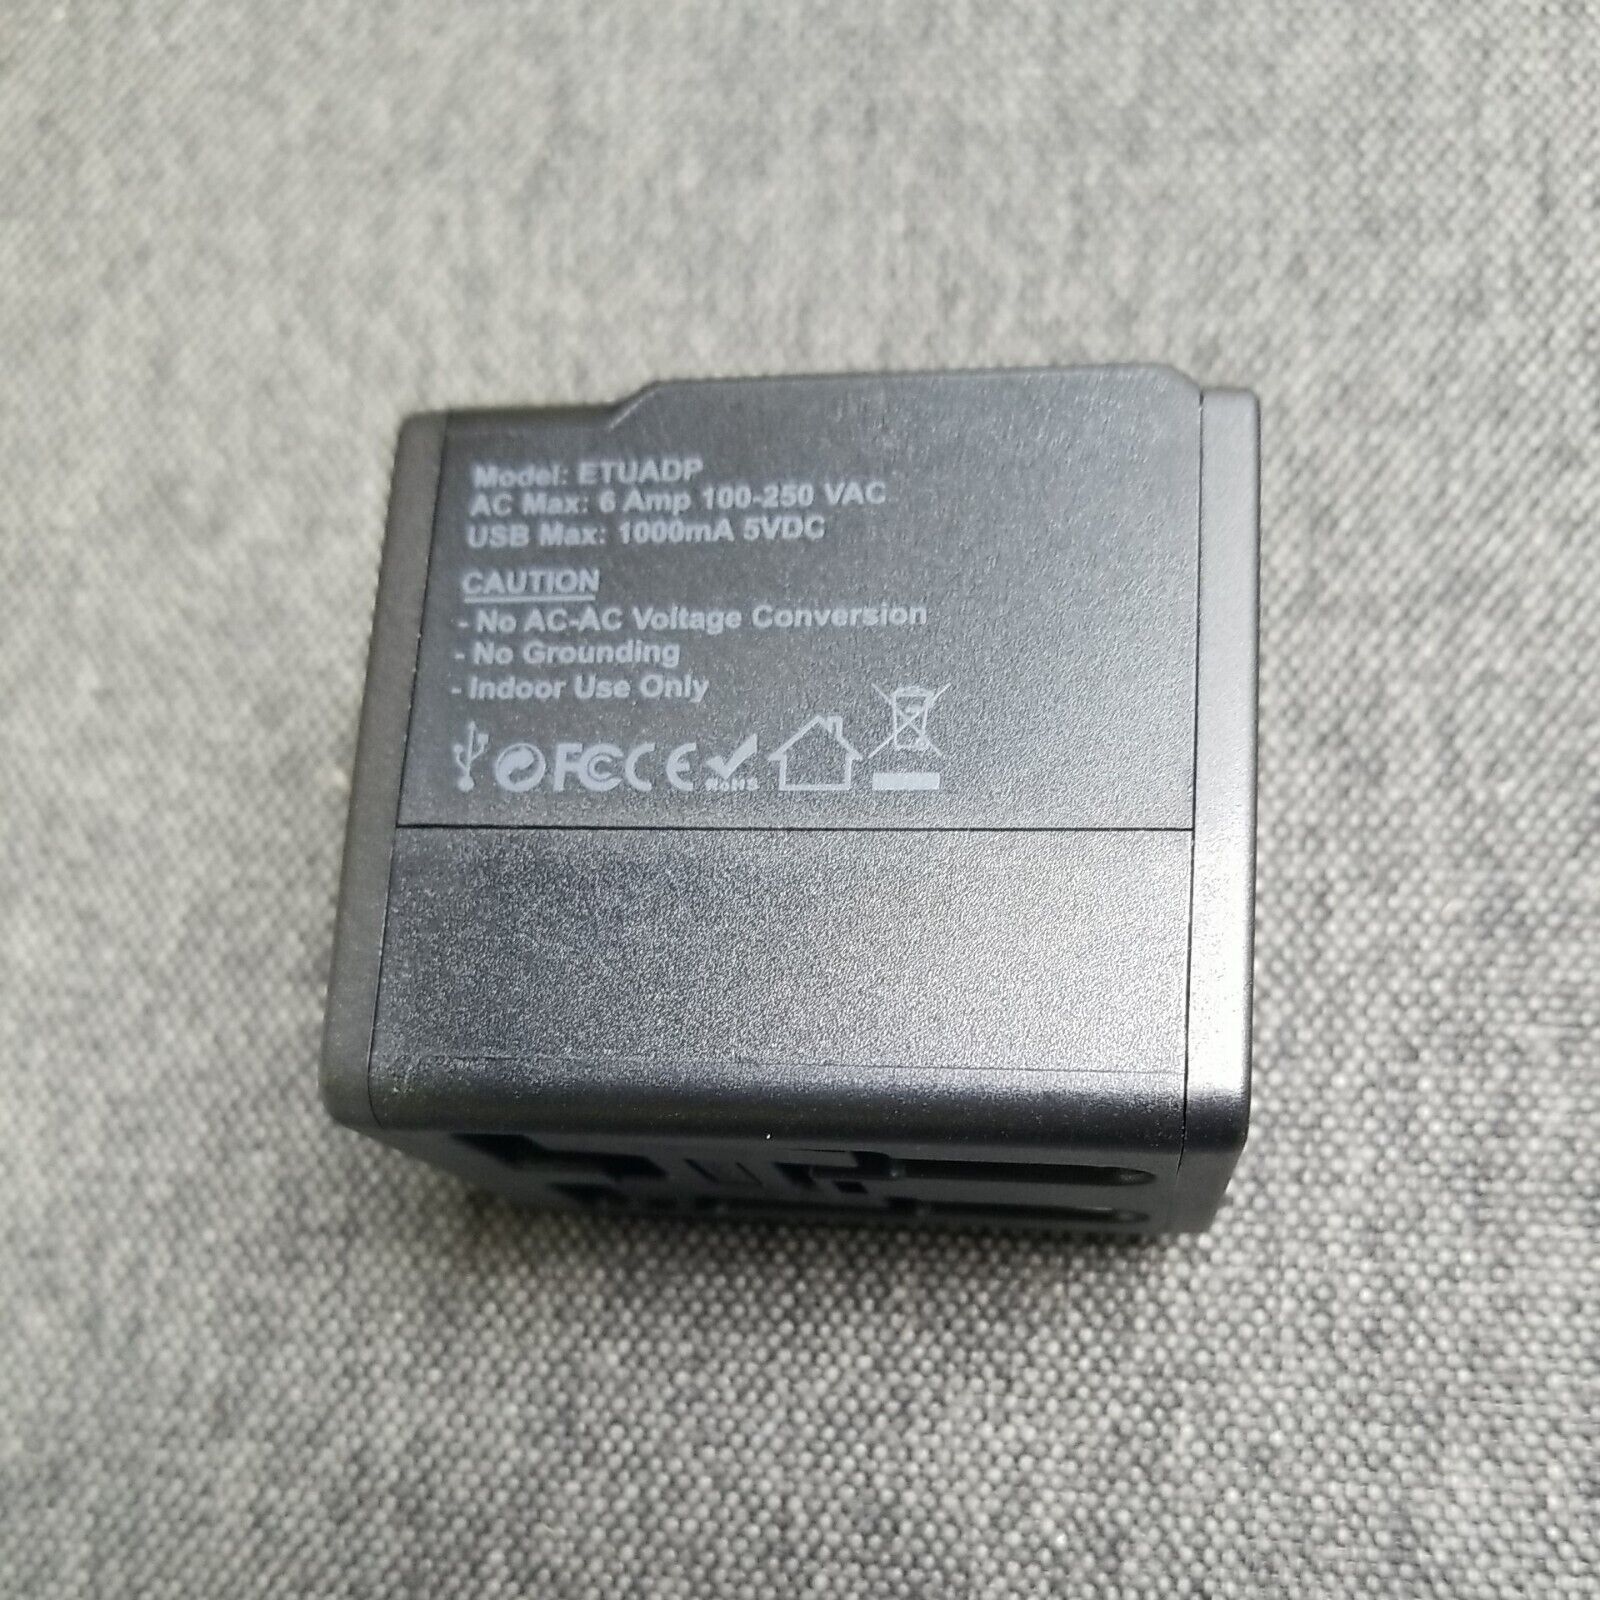 ReTrak Universal Travel Adapter with 2 USB Ports 5W - Black ETUADP